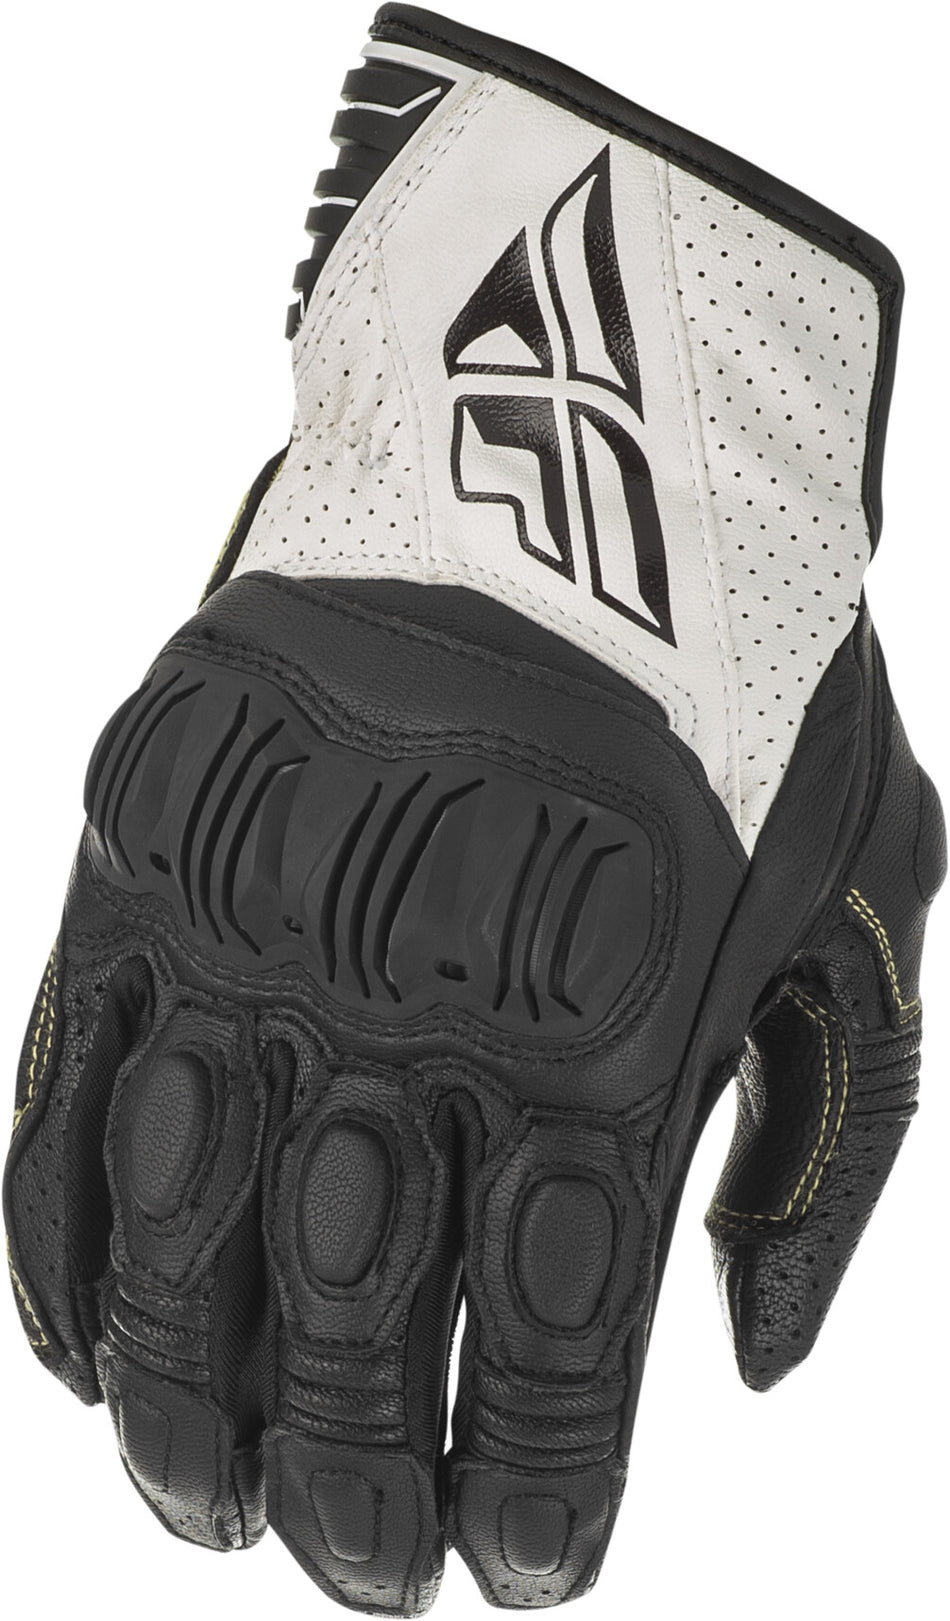 FLY RACING Brawler Gloves Black/White Xl 476-2093X